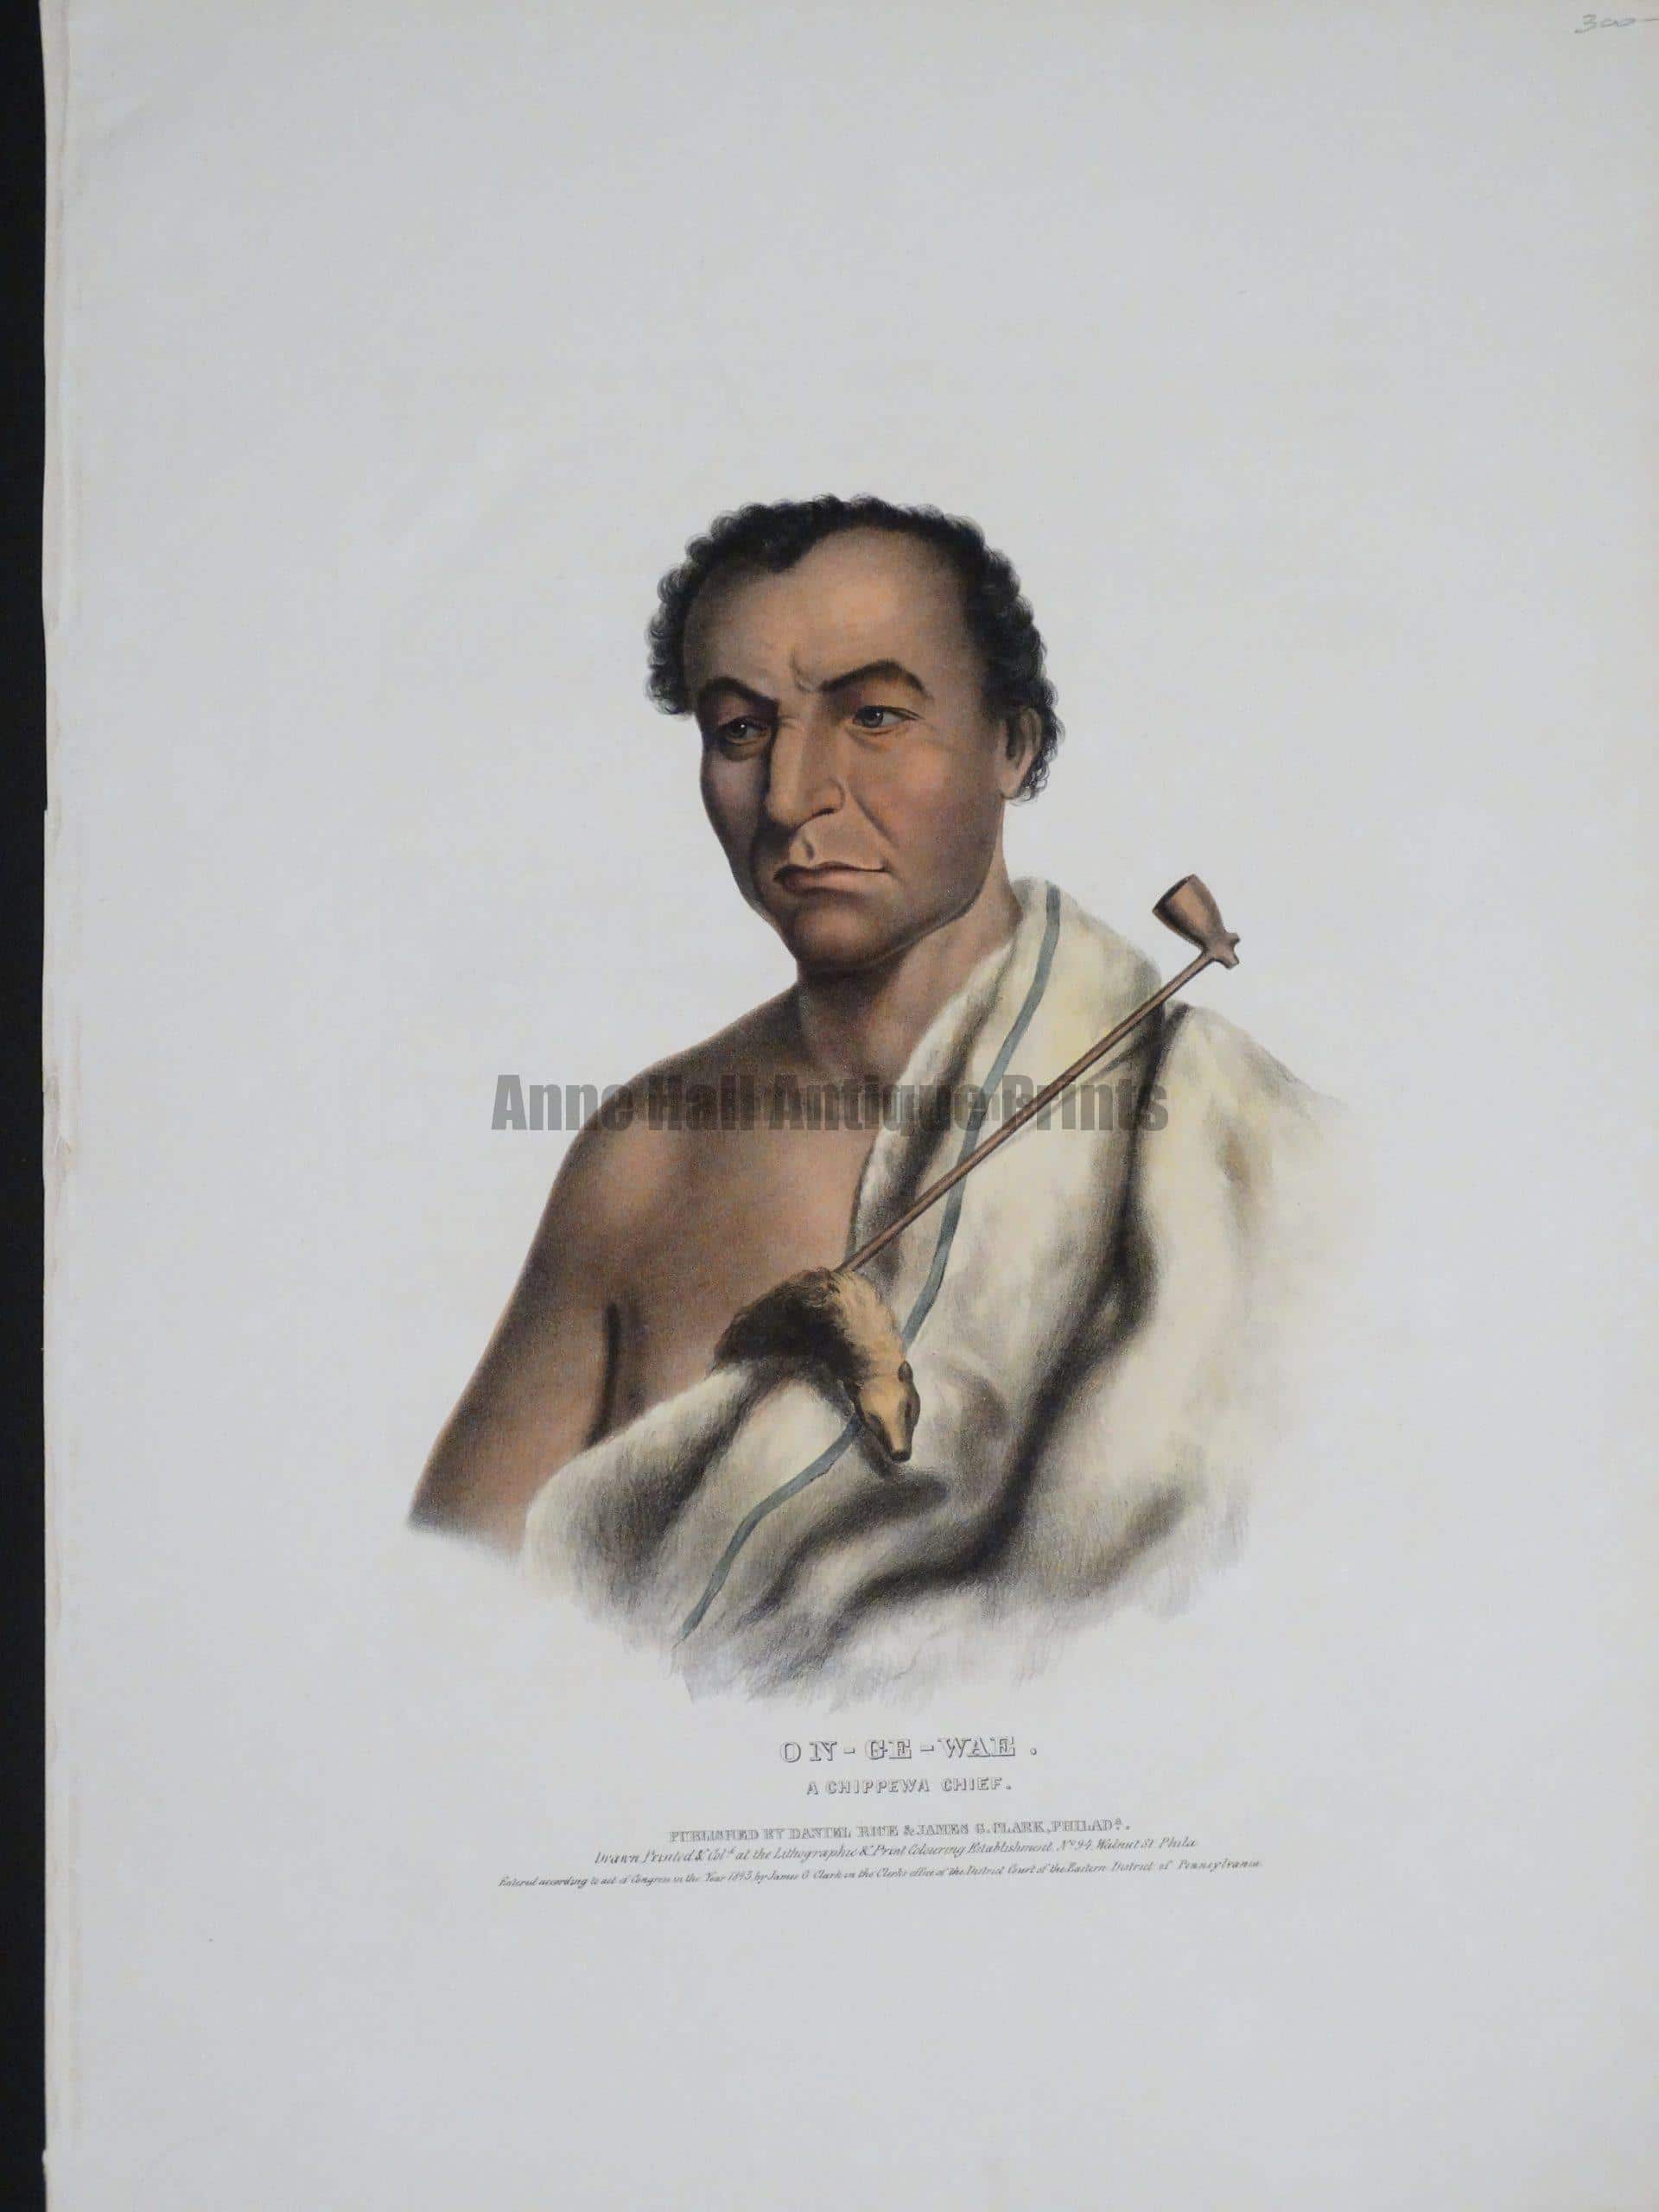 Original folio hand-colored lithograph, of McKenney Hall - On-Ge-Wae, A Chippewa Chief,